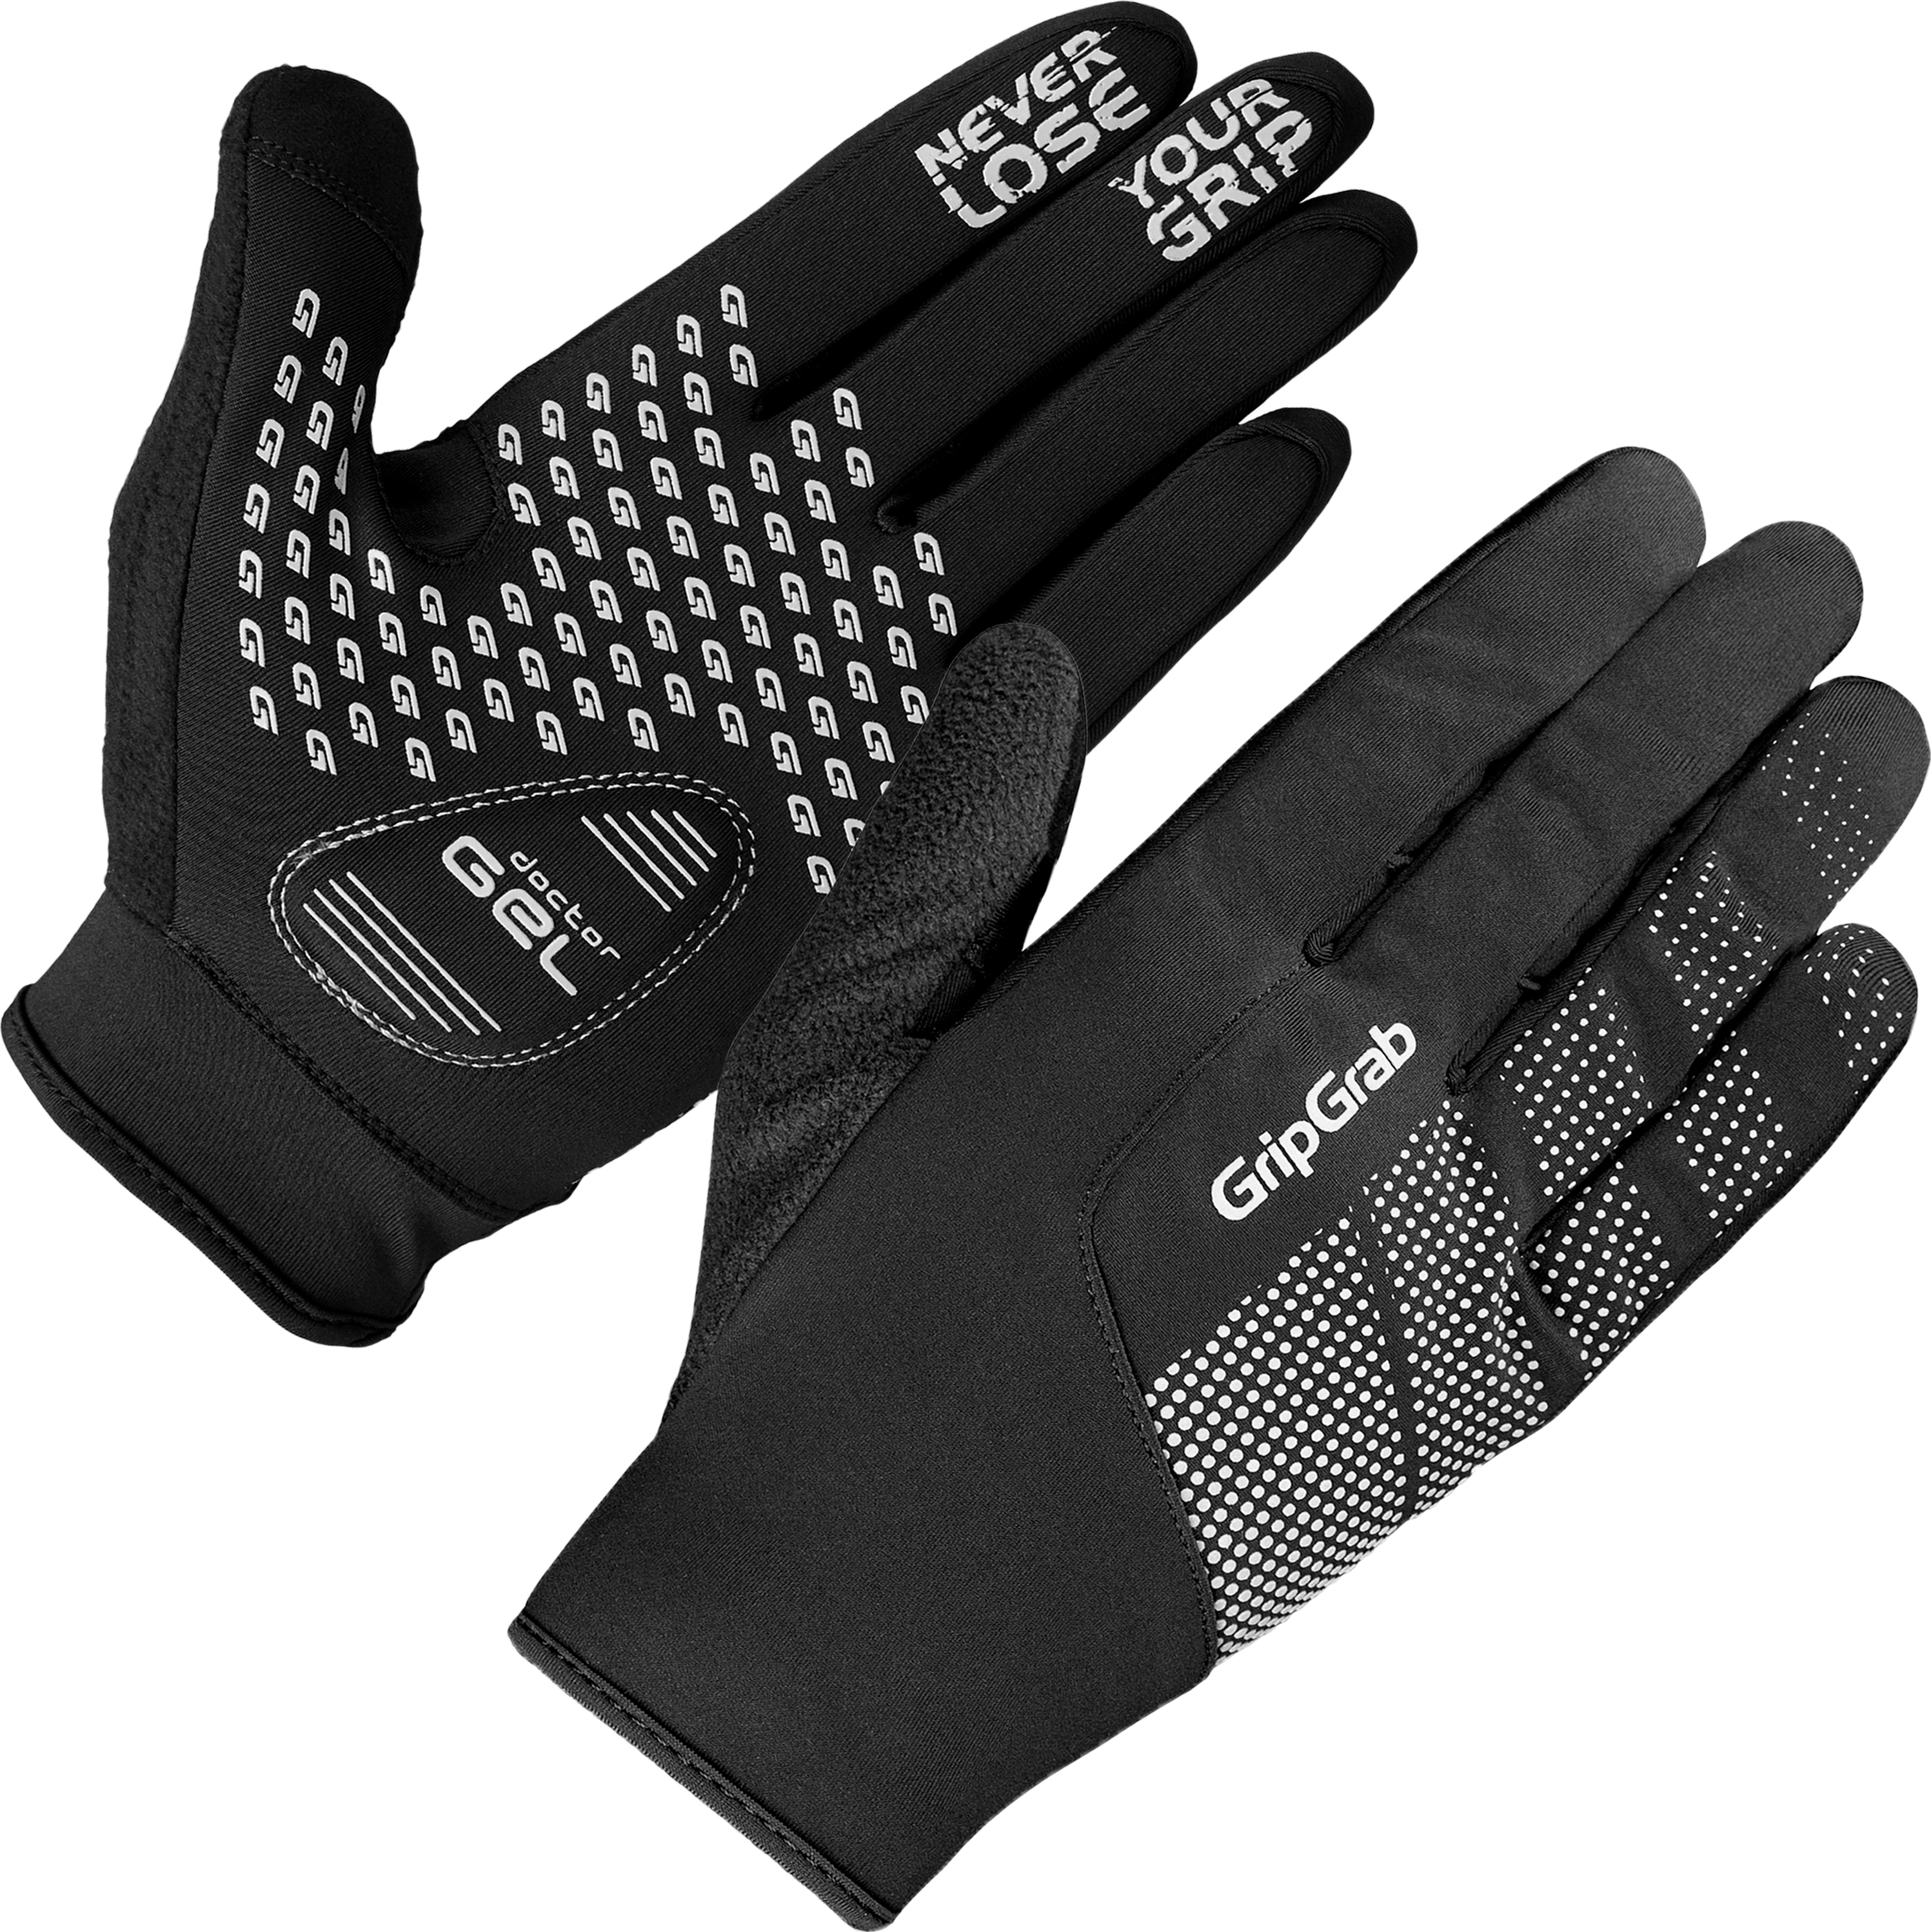 GripGrab Ride Windproof Midseason Glove Black